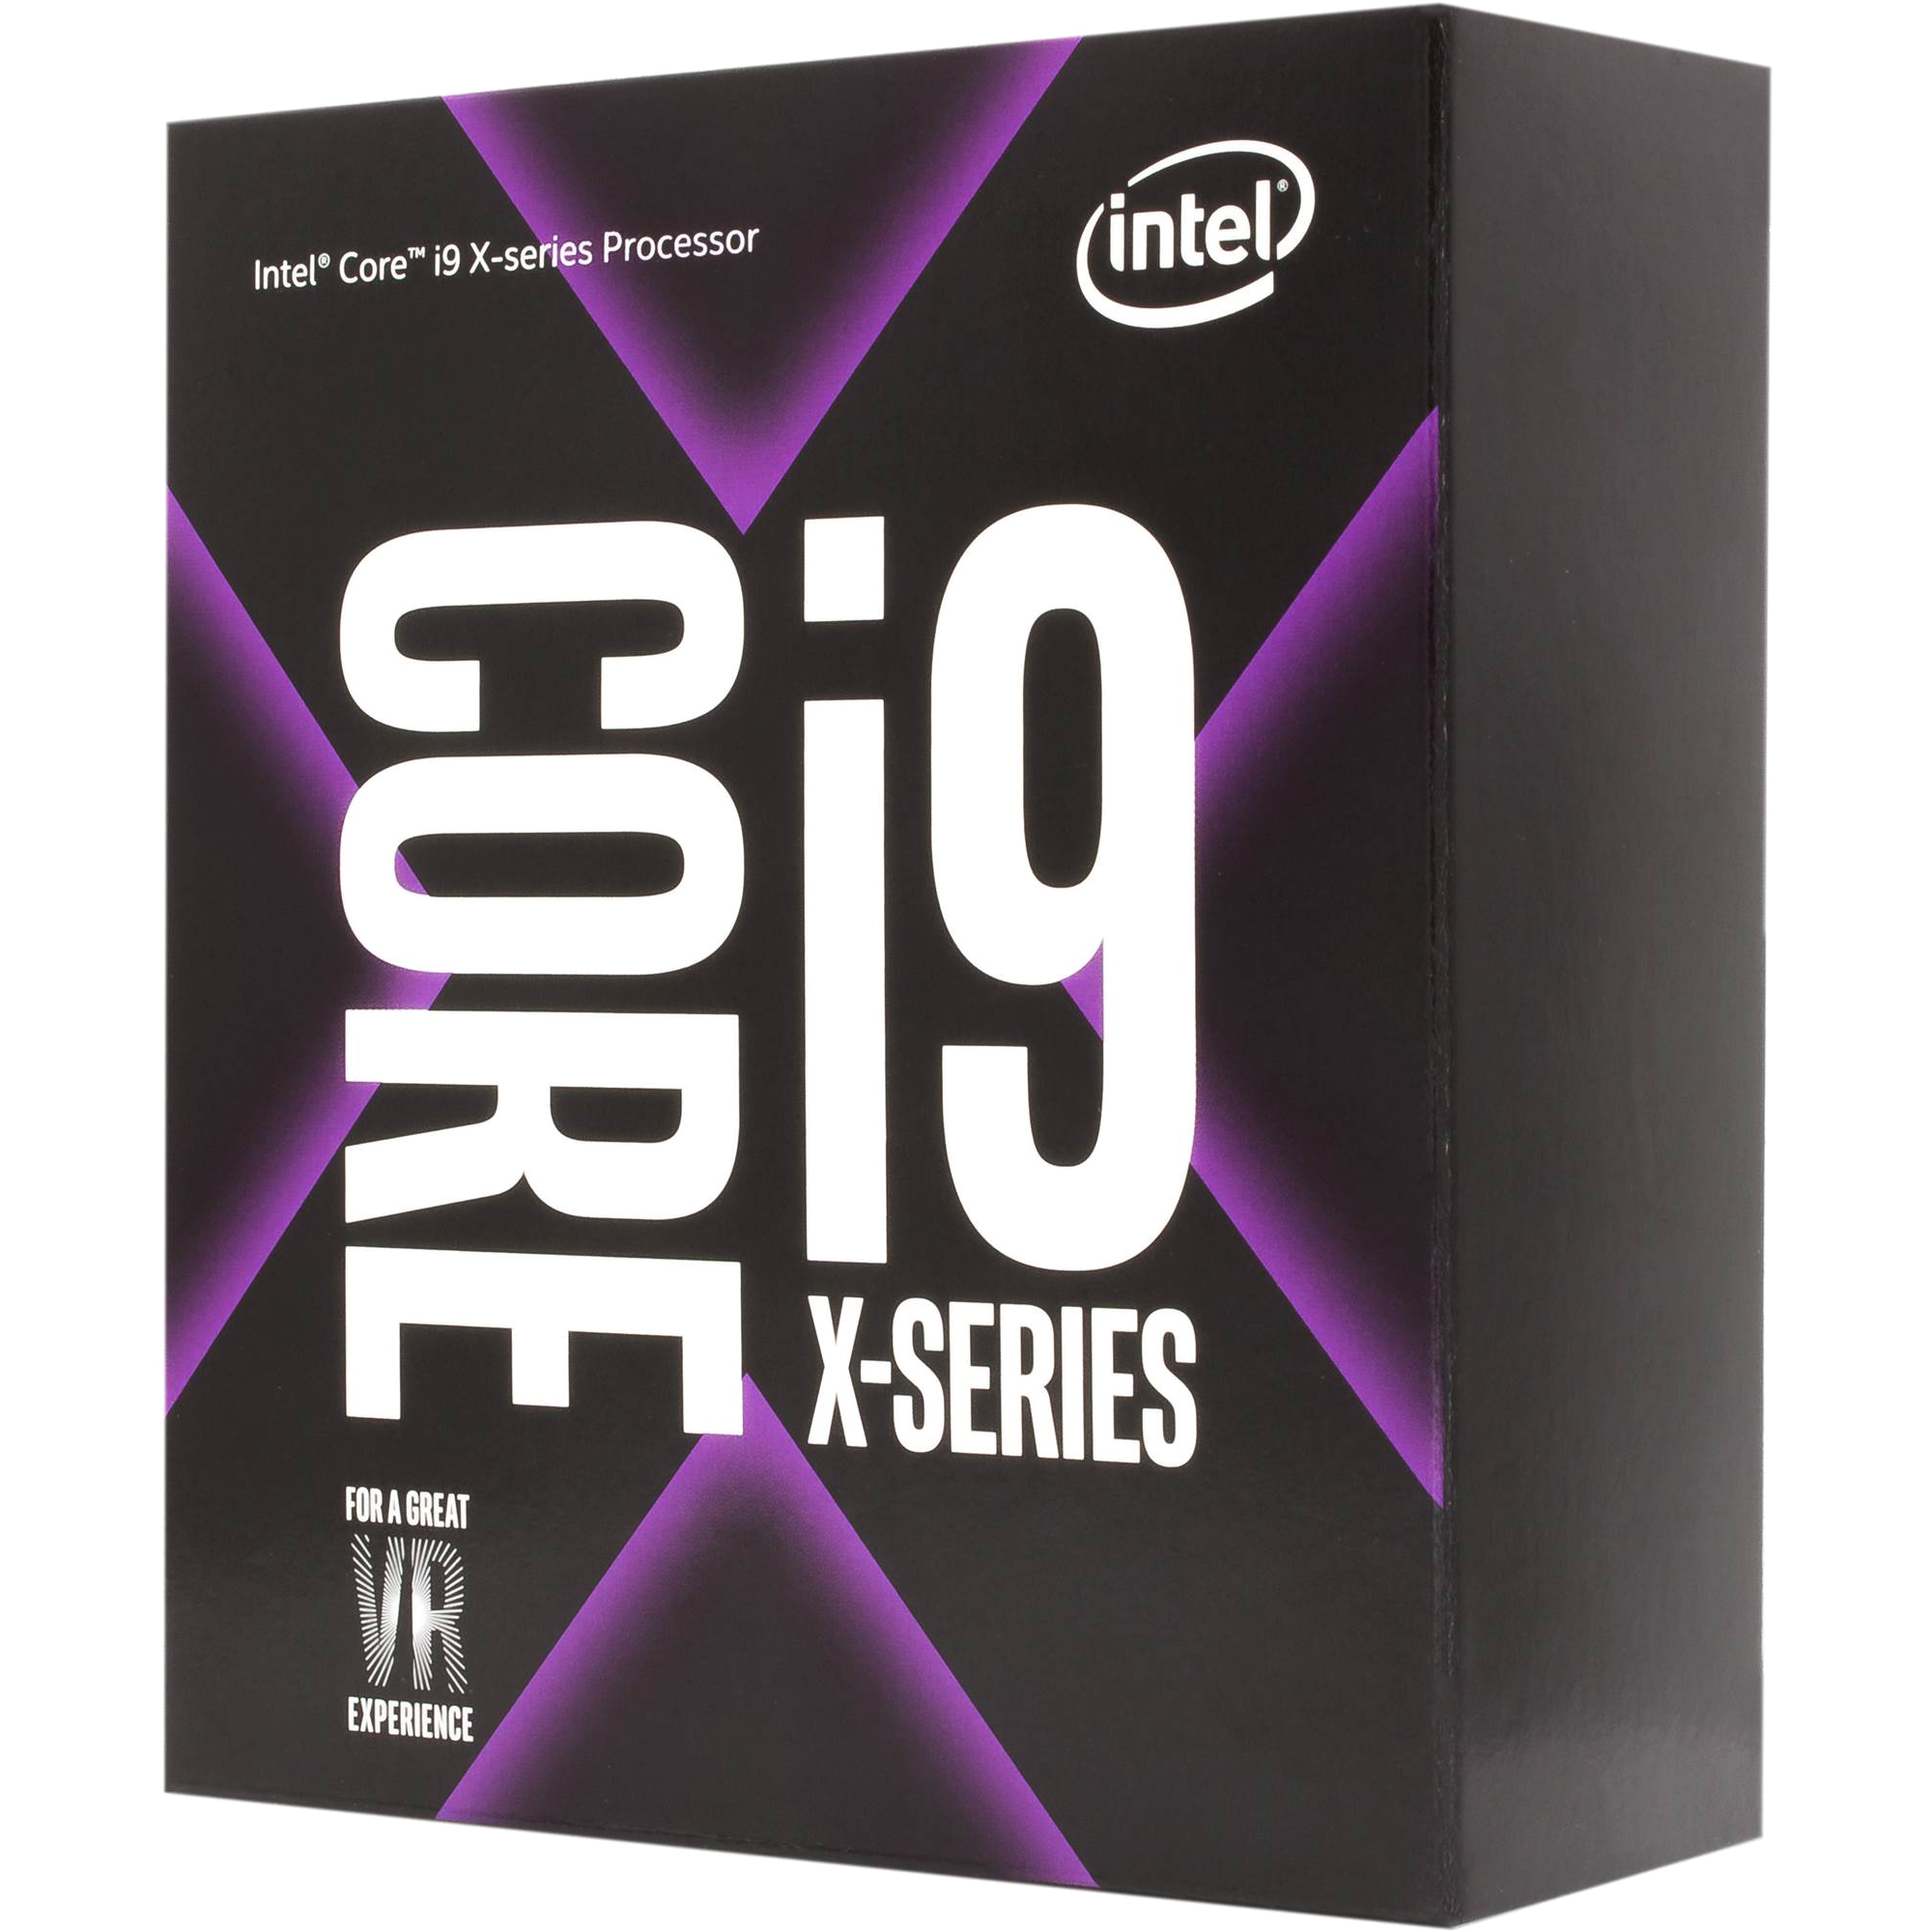 Intel Core i9-7900X Skylake-X 10-Core 3.3 GHz LGA 2066 Desktop Processor - BX80673I97900X - image 3 of 3